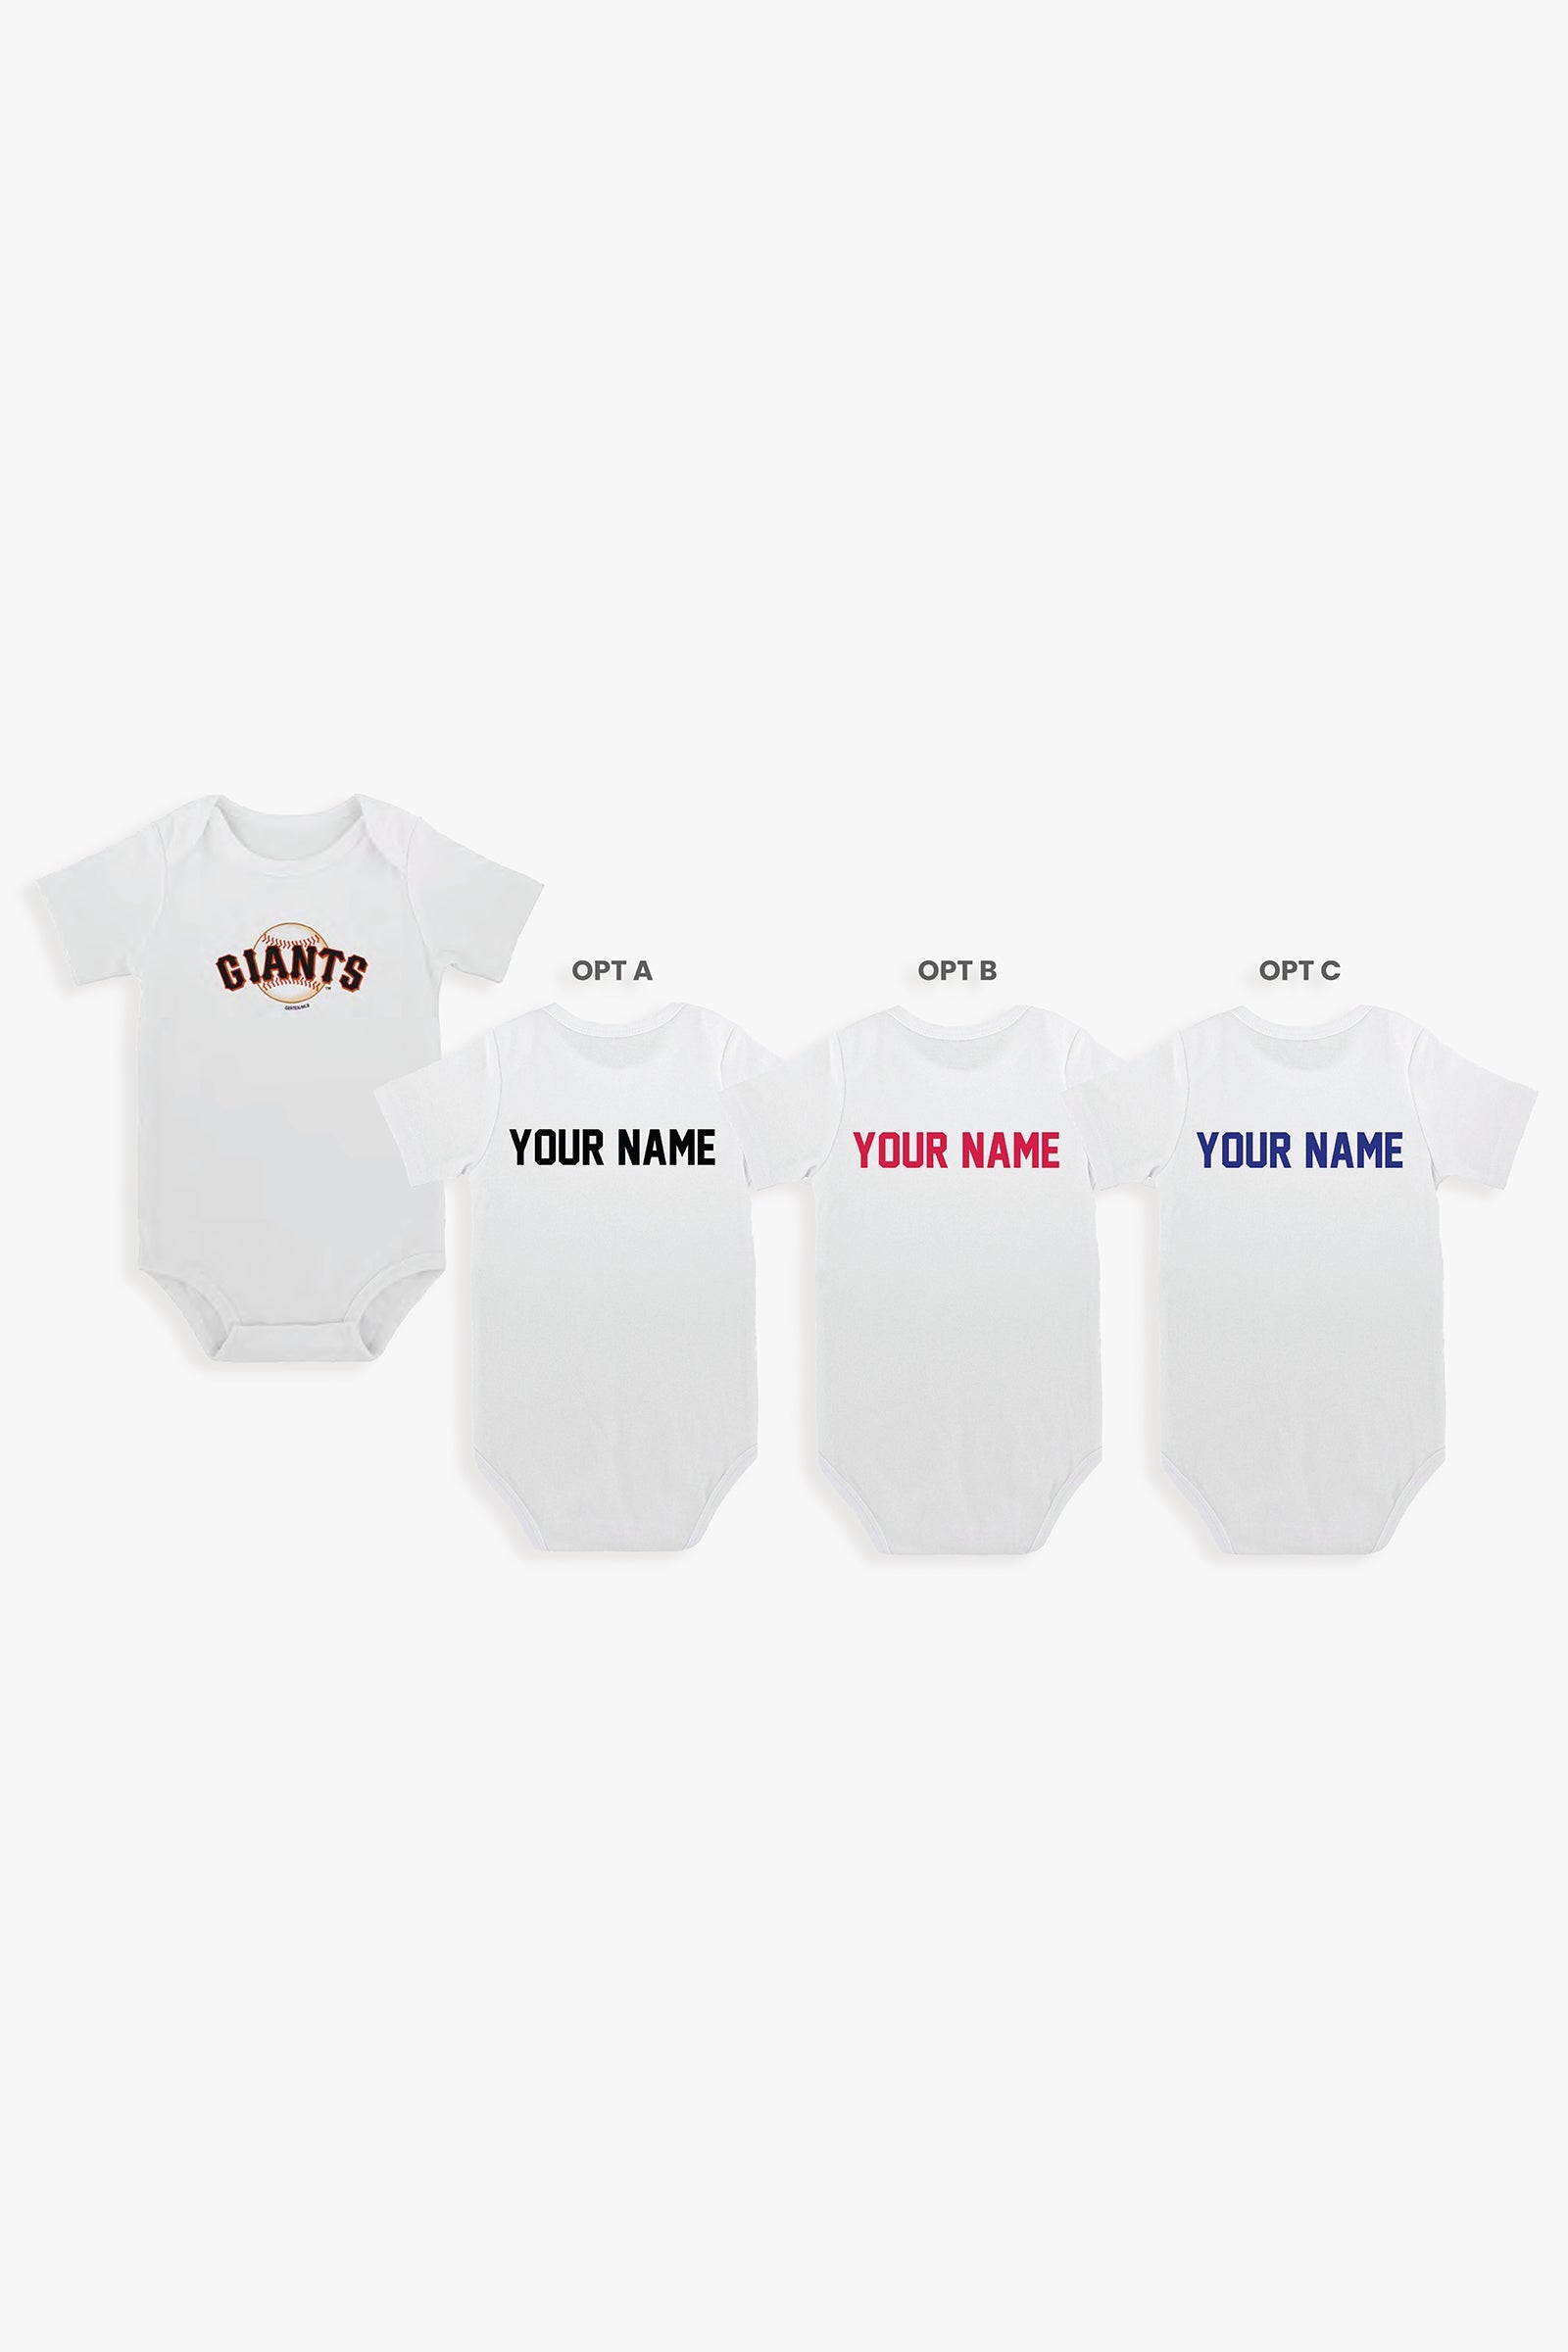 Gertex Customizable MLB Baby Bodysuit in White (12-18 Months)